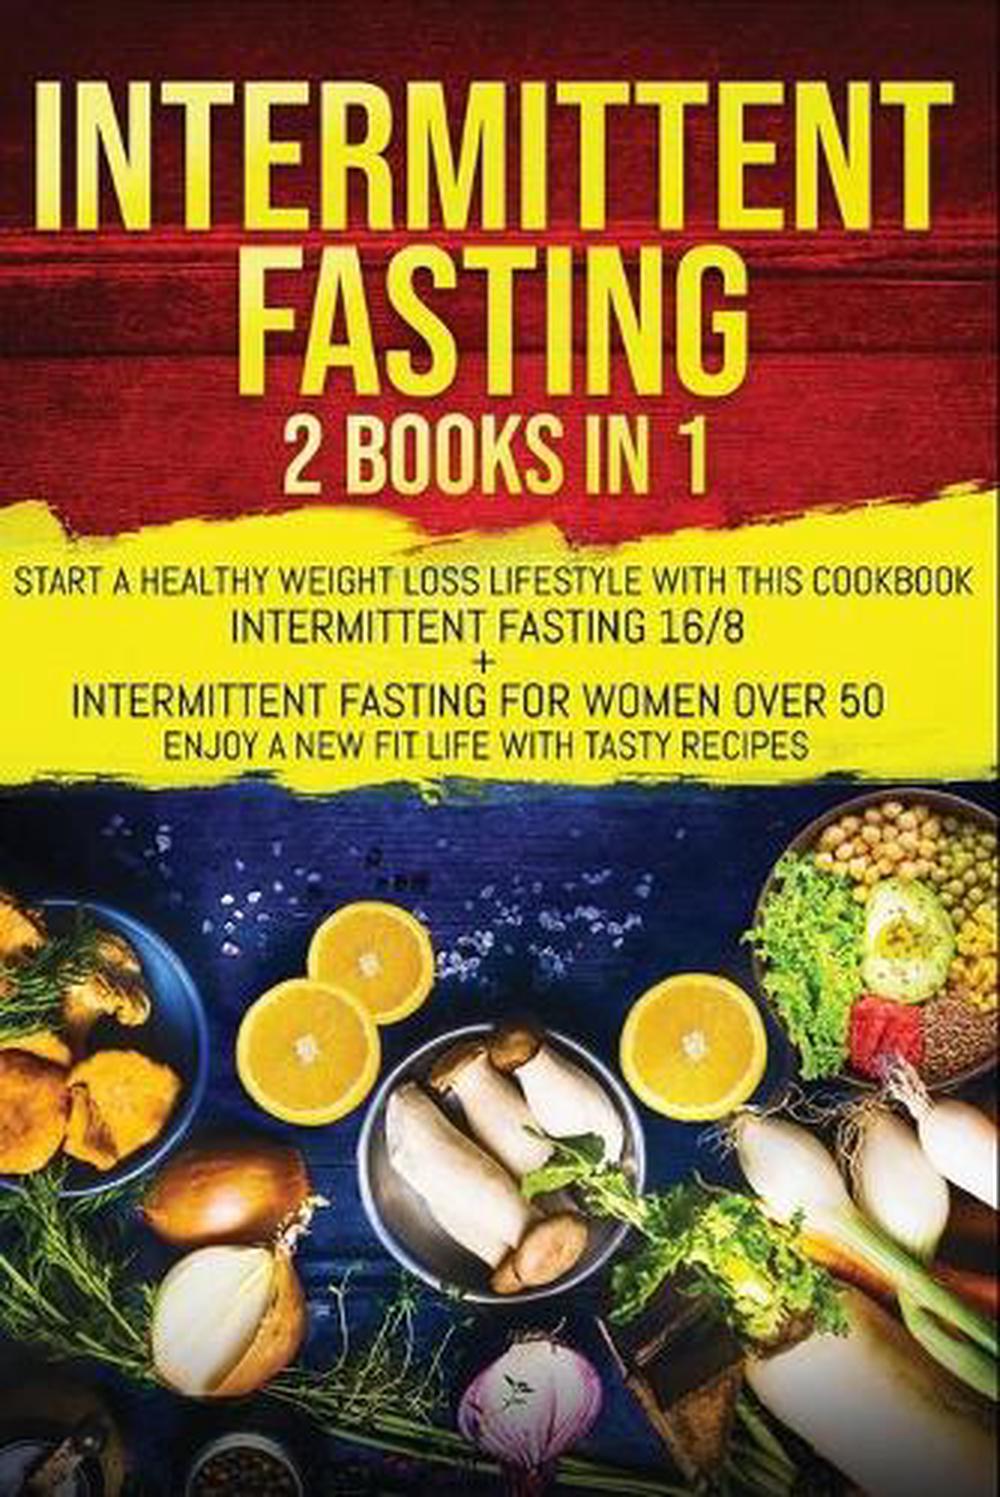 Intermittent Fasting Books Amazon - Pin on Amazon kindle promote ...